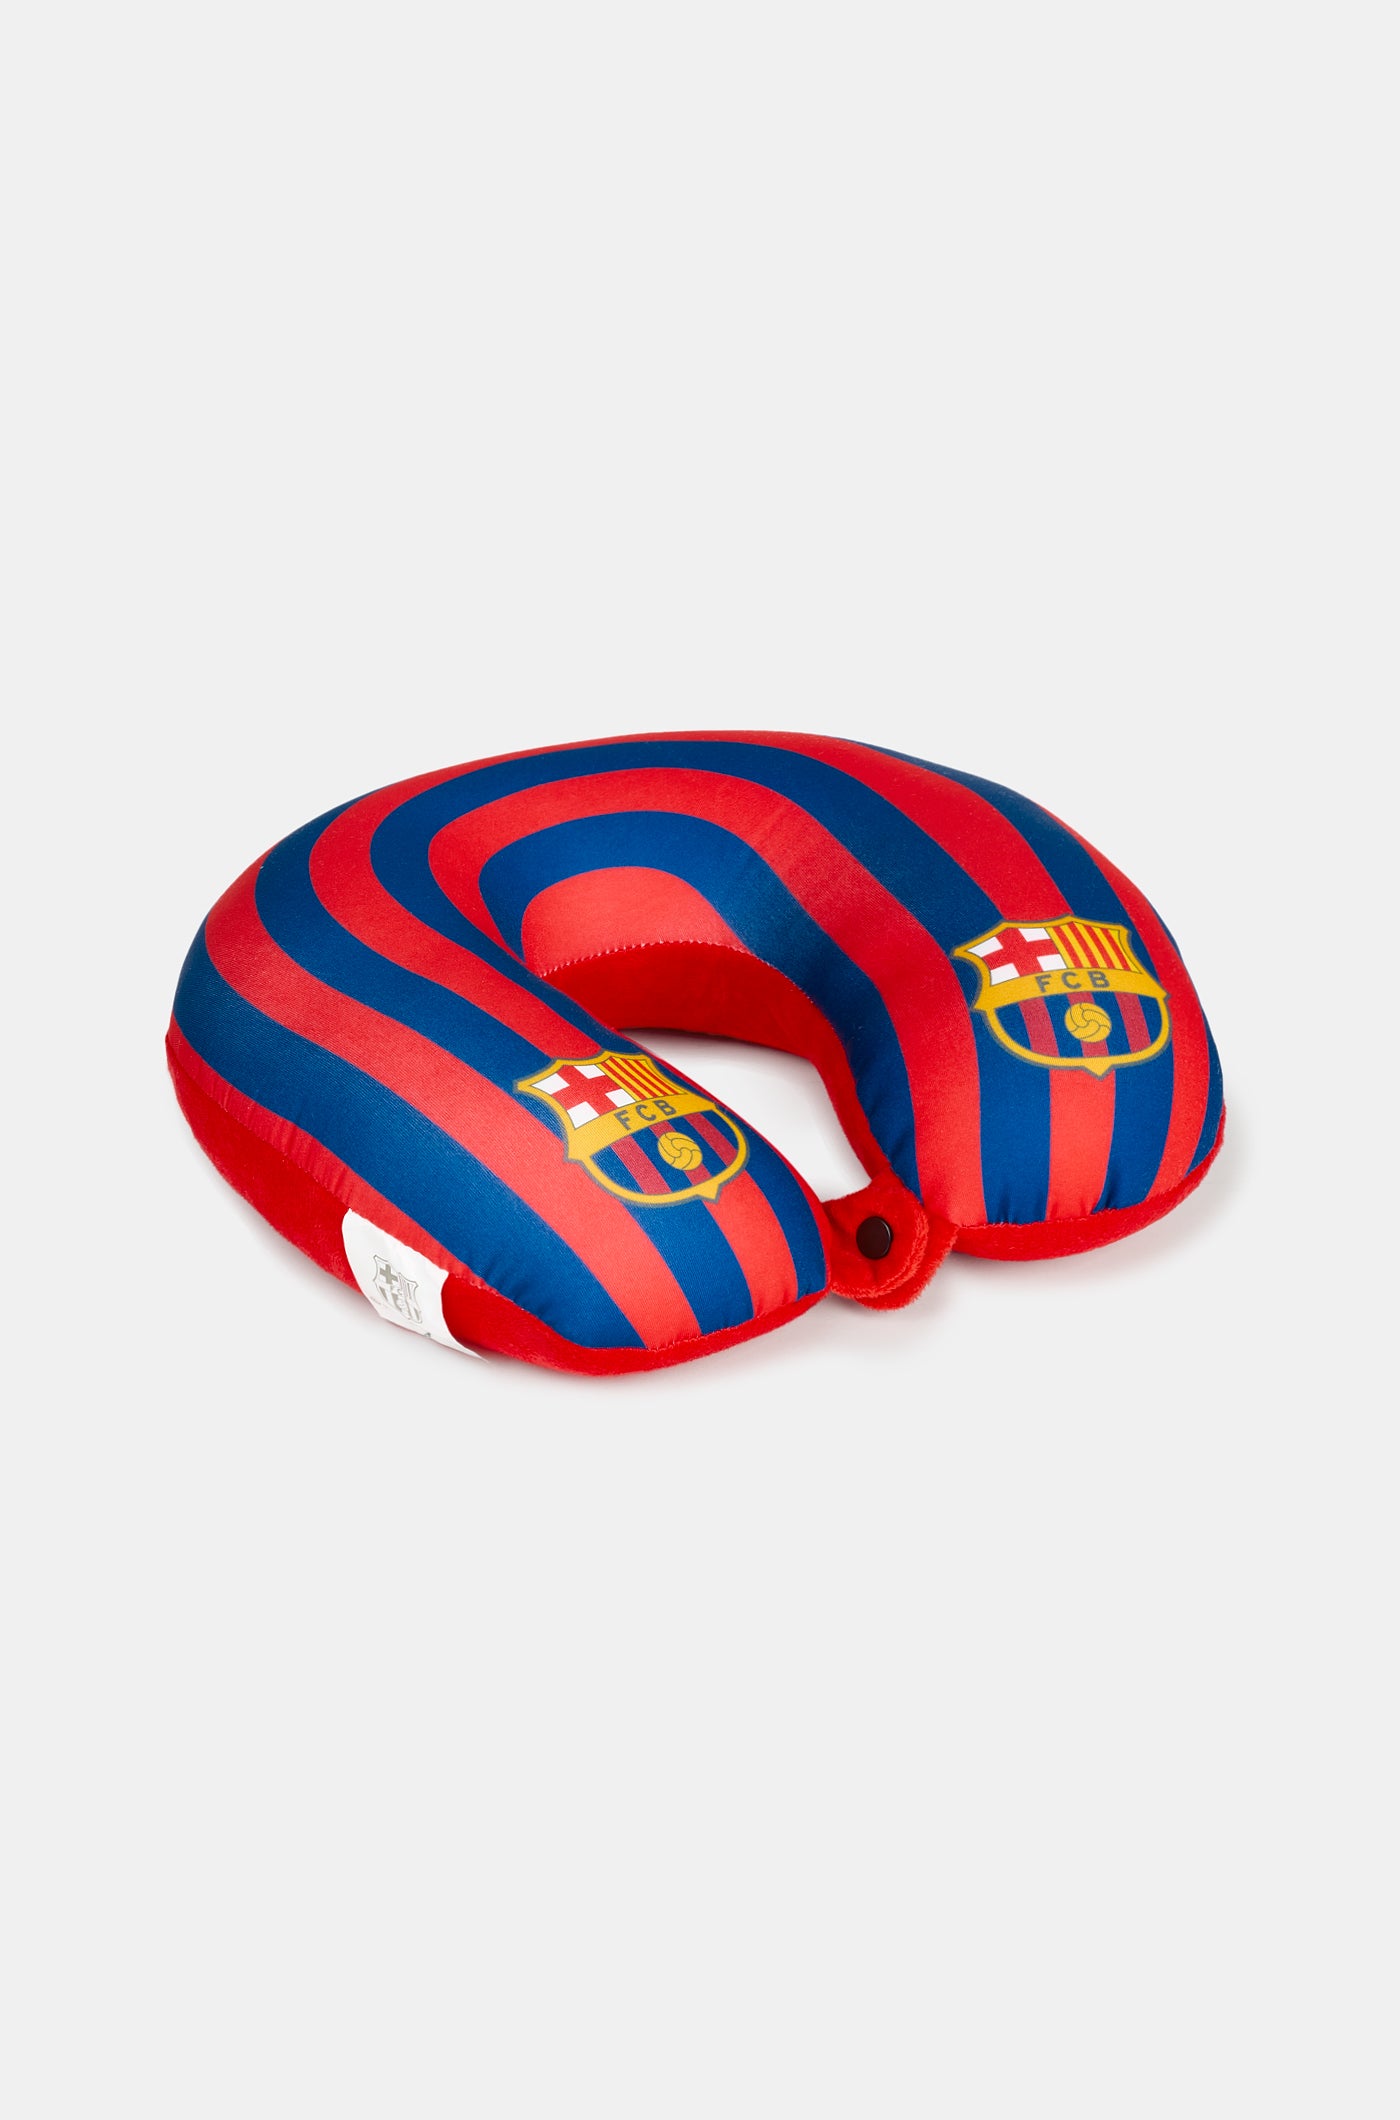 FC Barcelona neck pillow